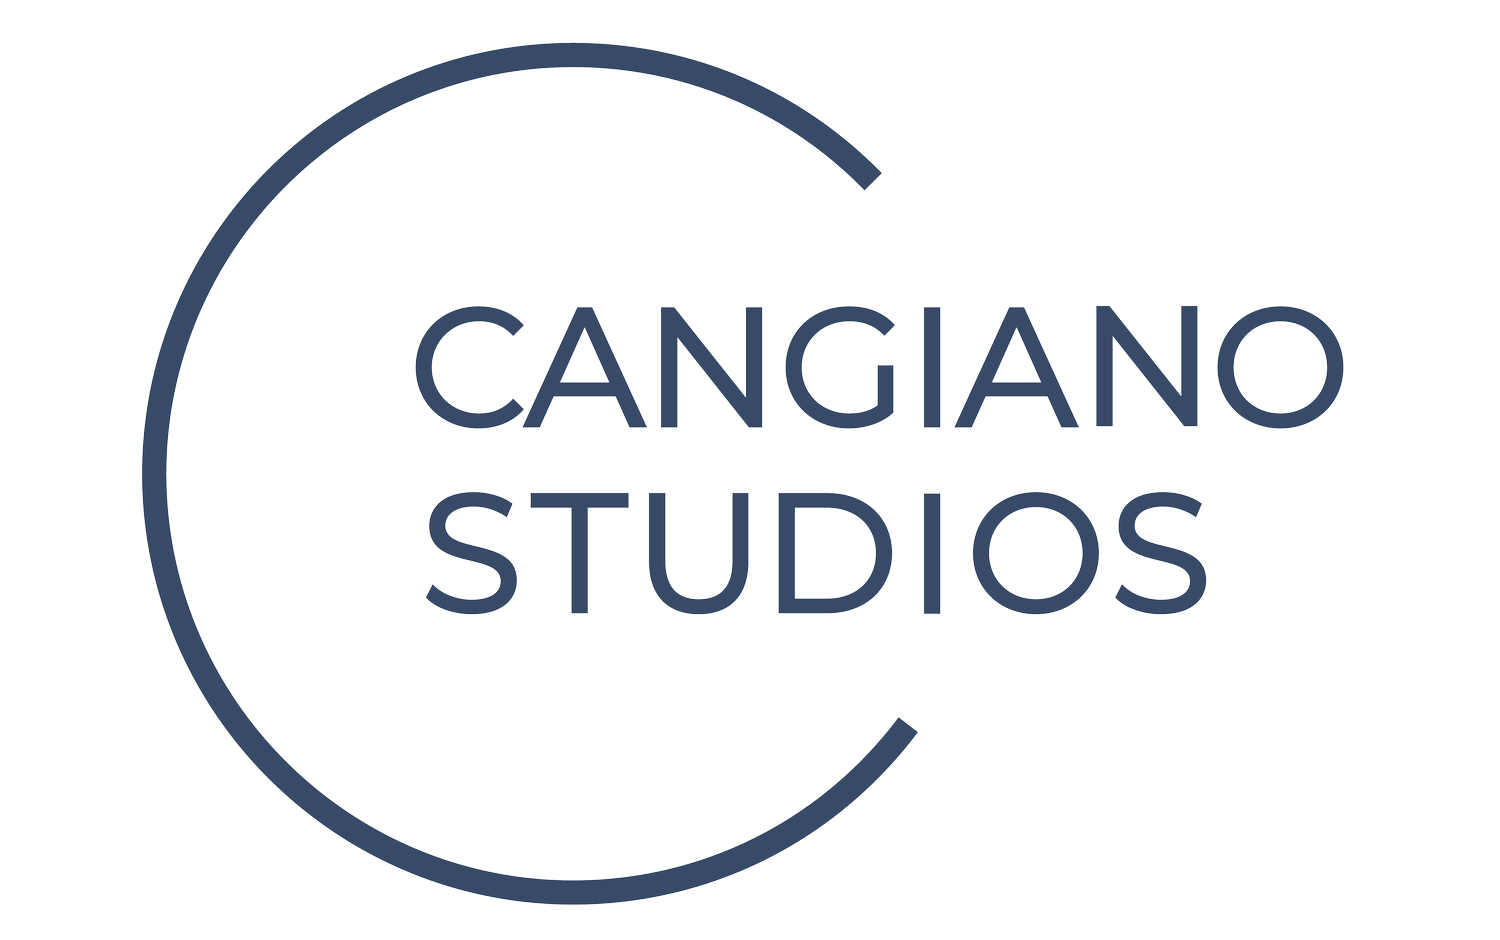 Cangiano Studios